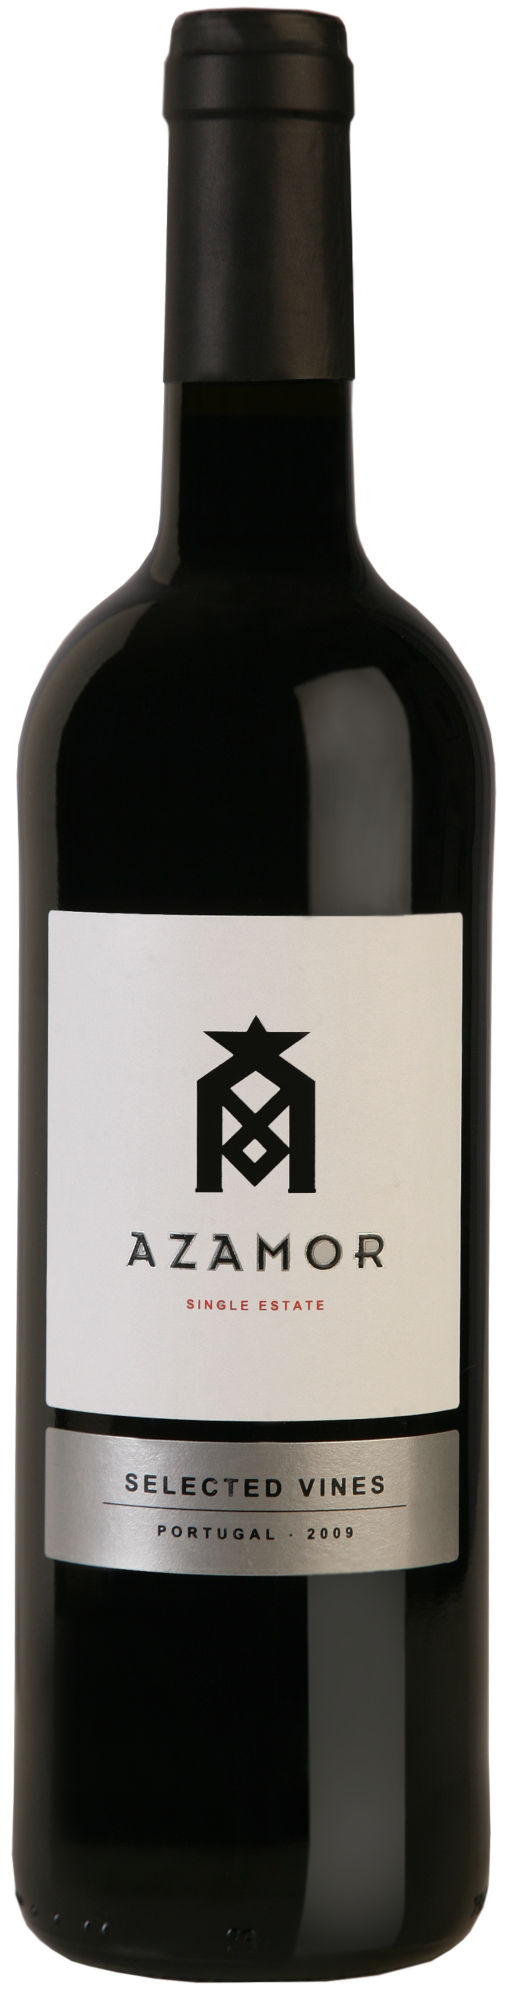 Azamor-Selected-Vines